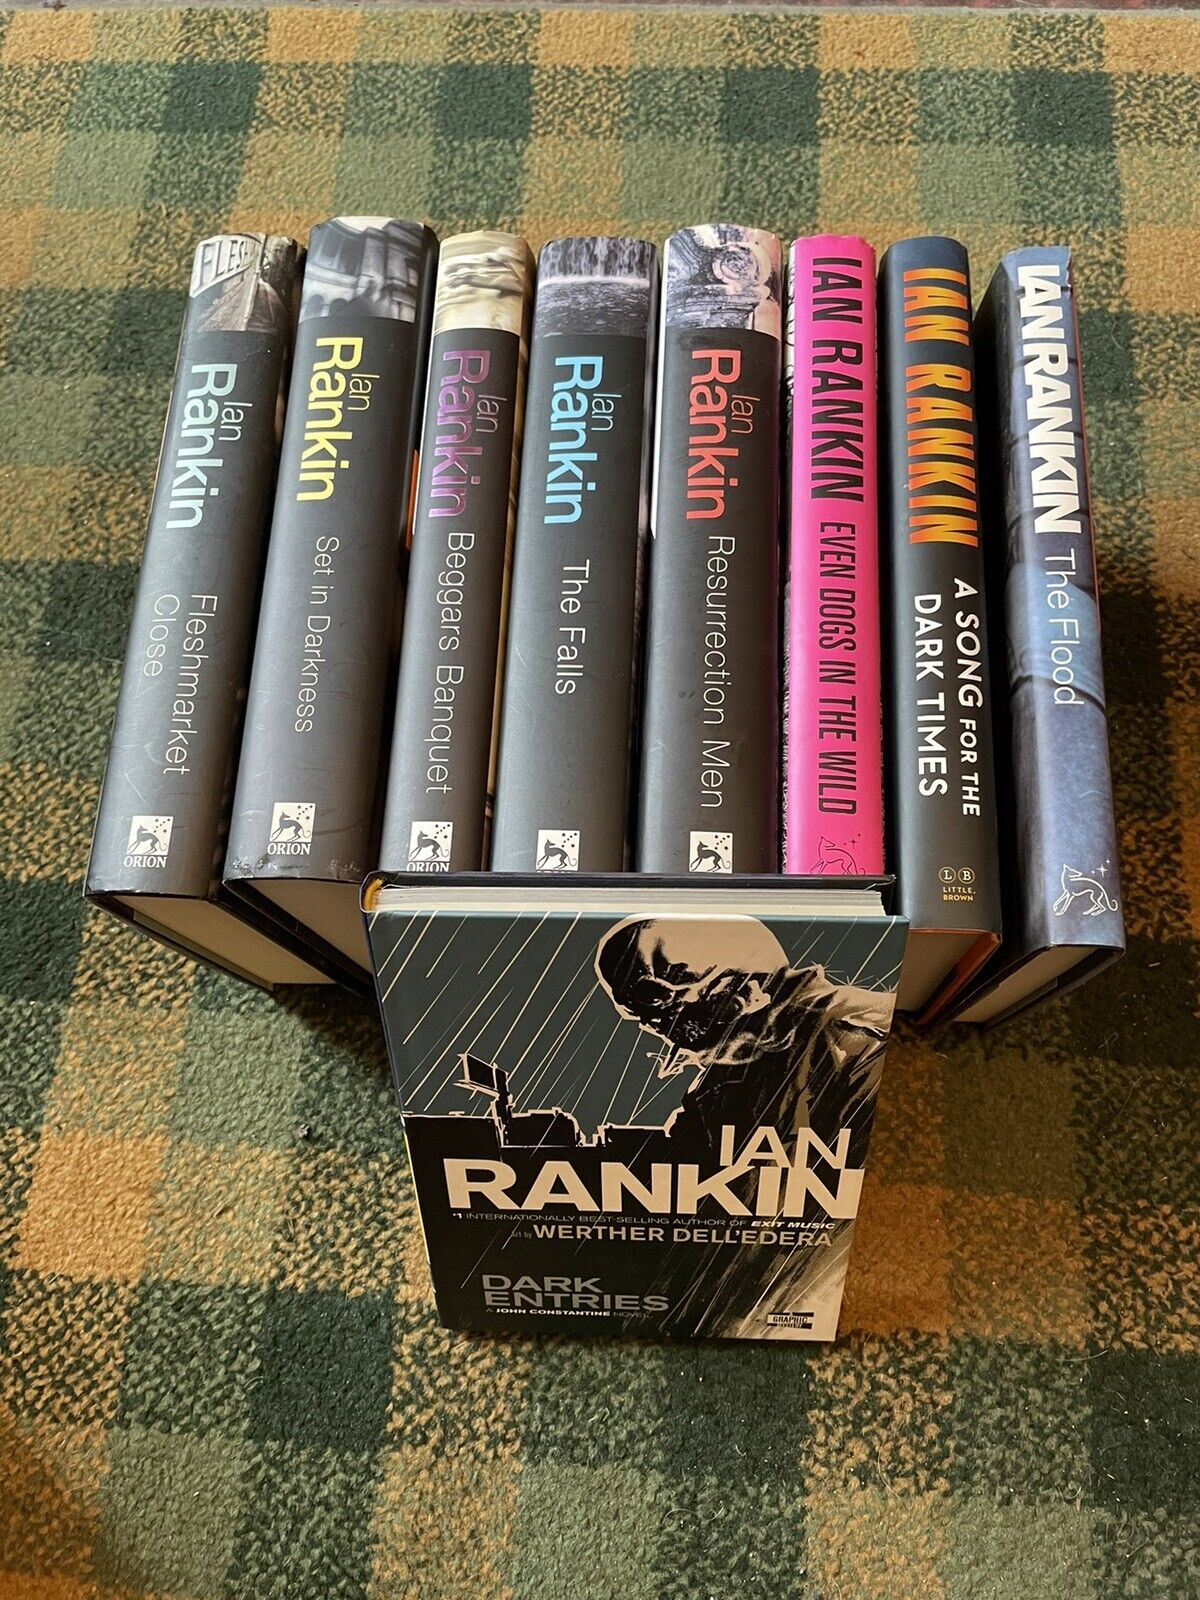 9 x Signed Ian Rankin First Editions (Hardbacks) Crime Detective Fiction